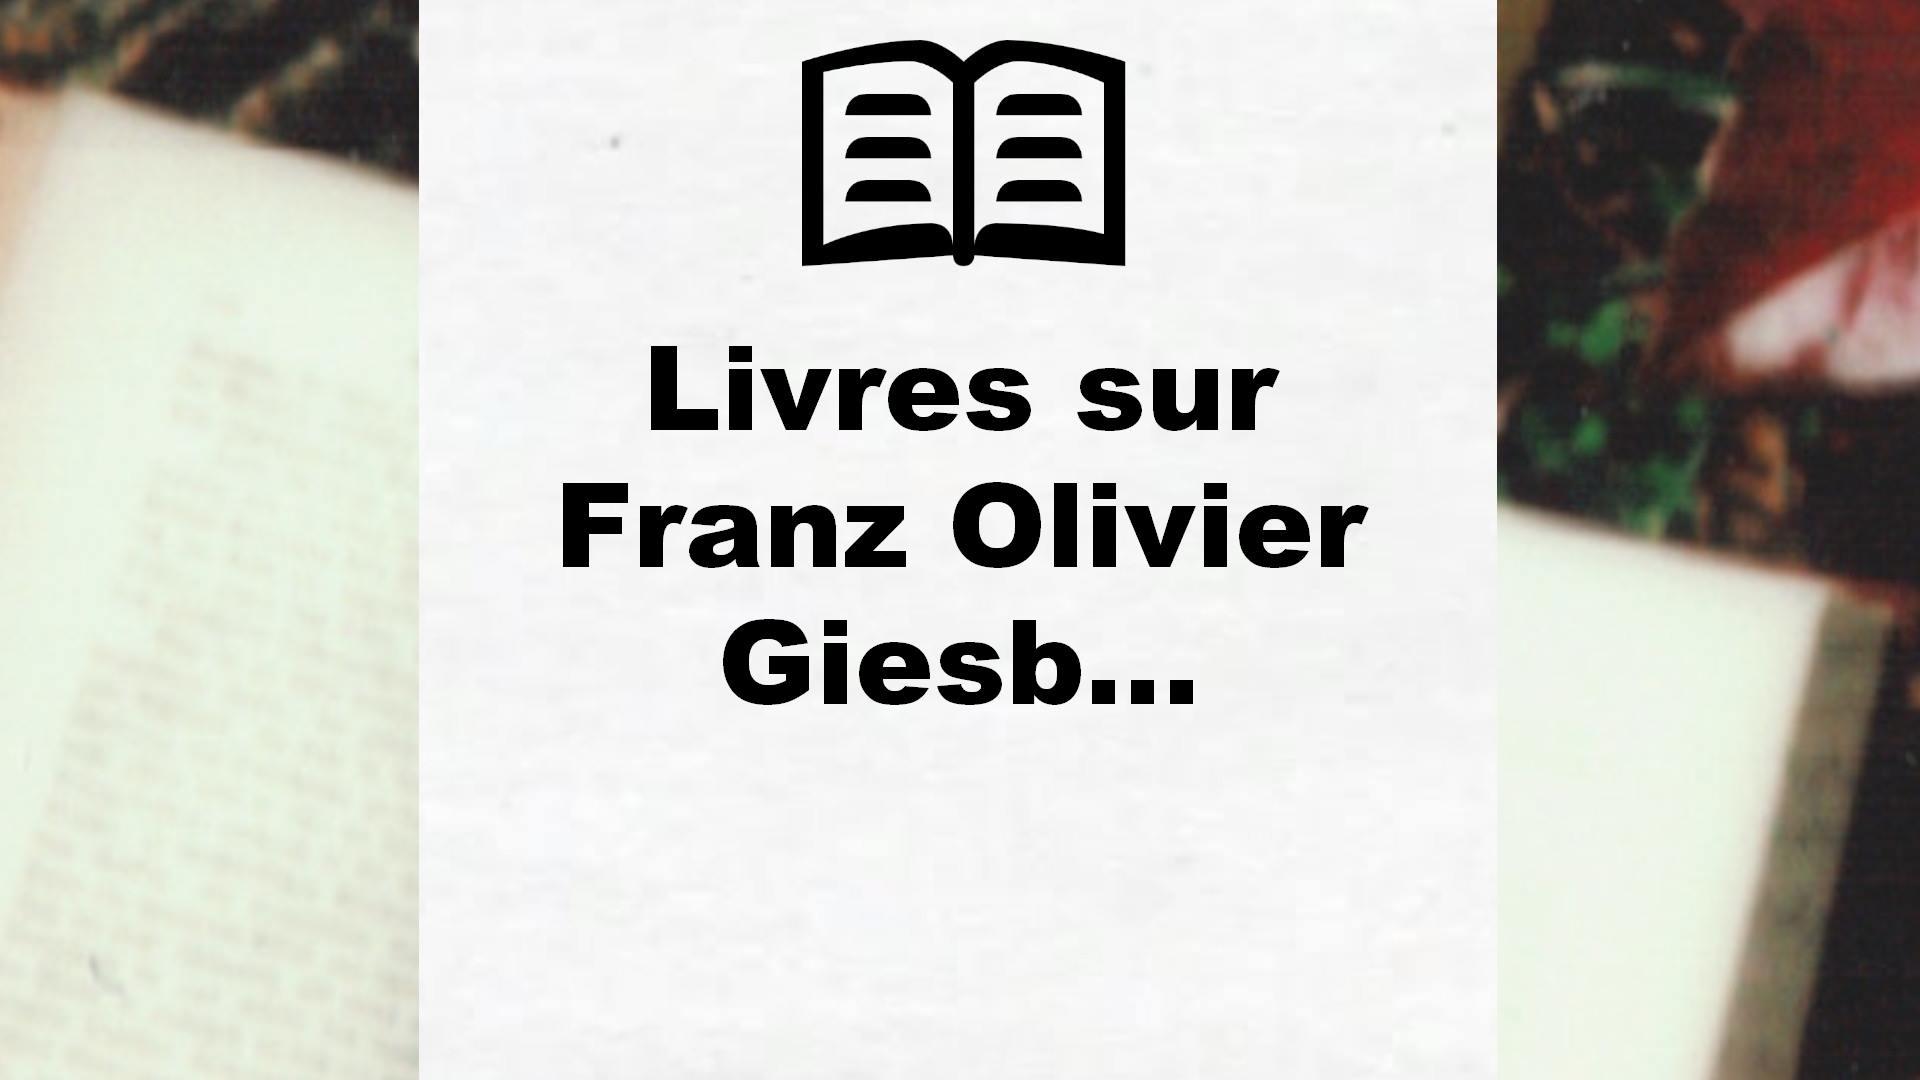 Livres sur Franz Olivier Giesbert